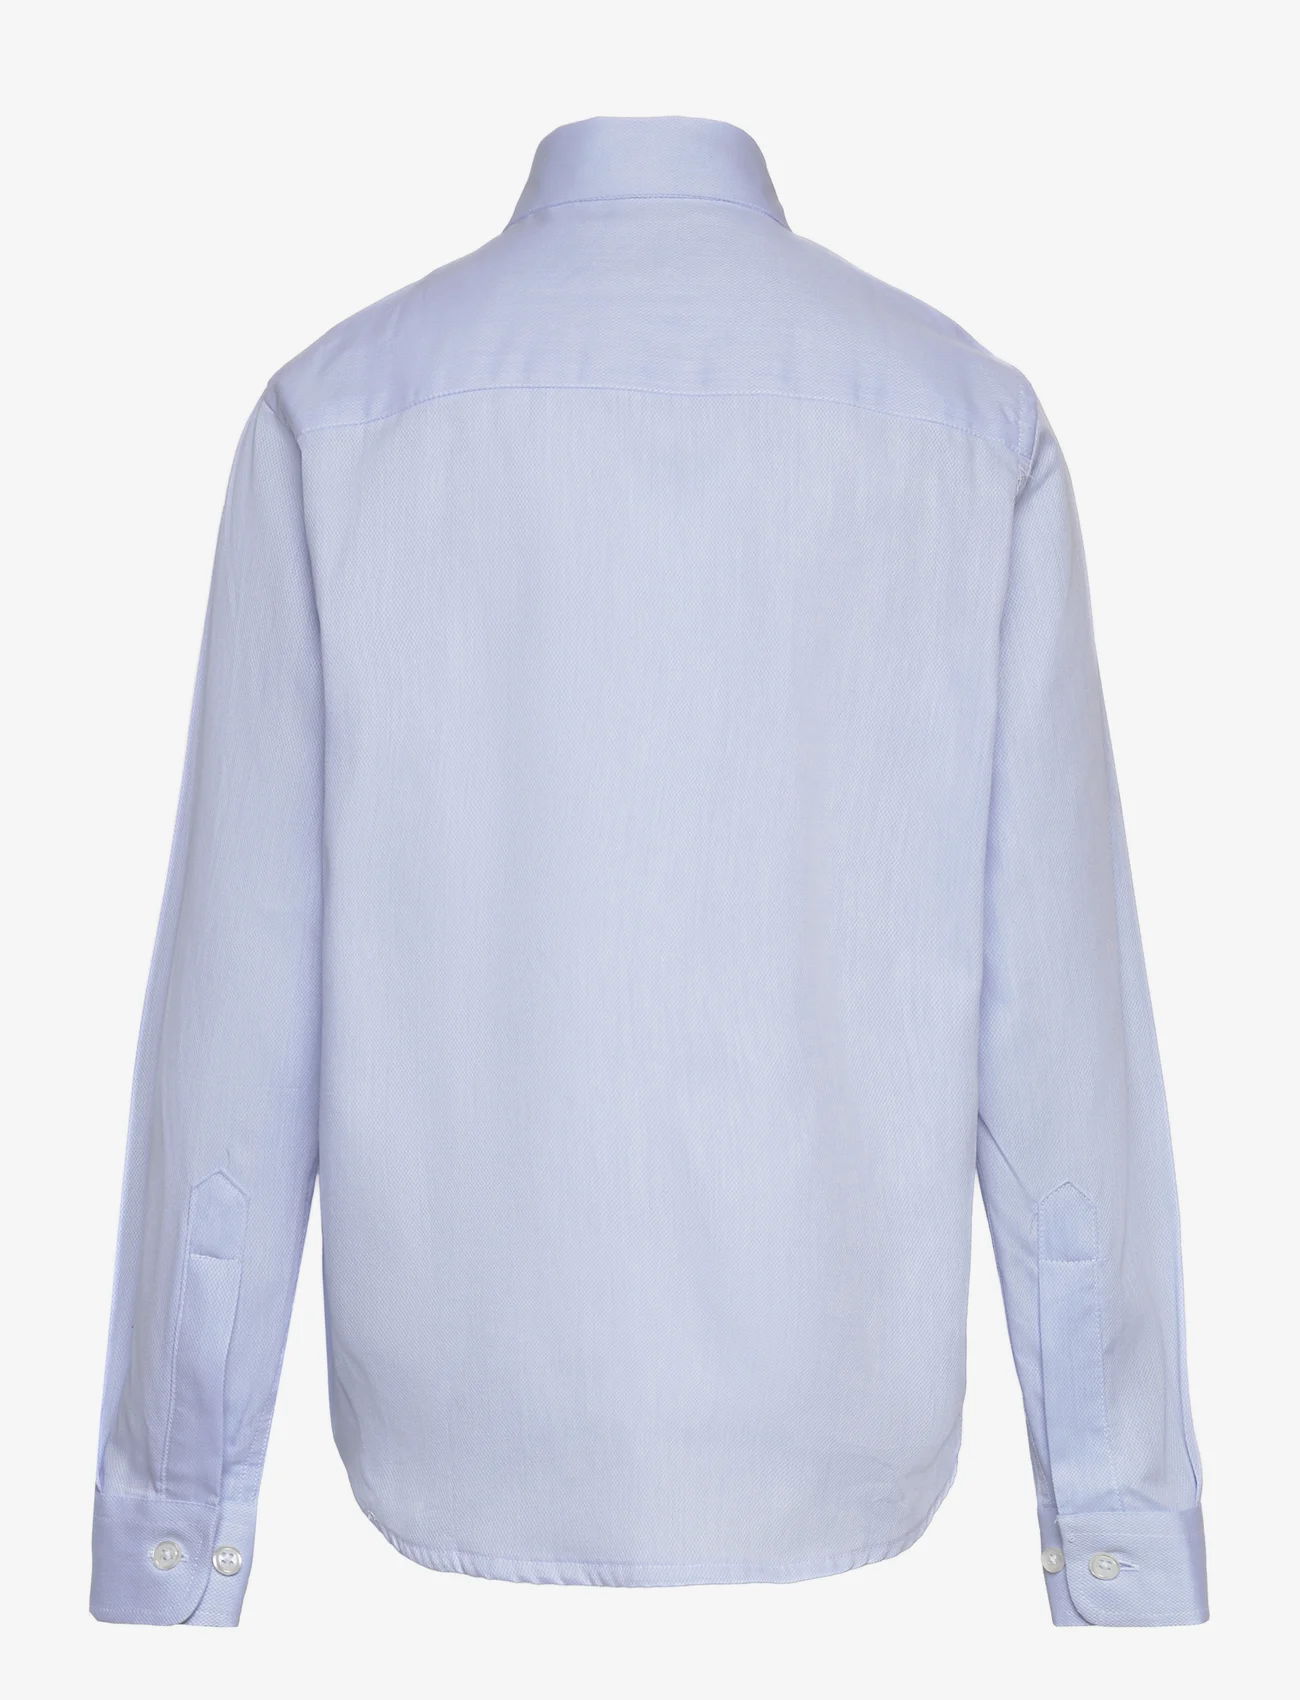 Grunt - Tex Twill Ice Shirt - langärmlige hemden - blue - 1